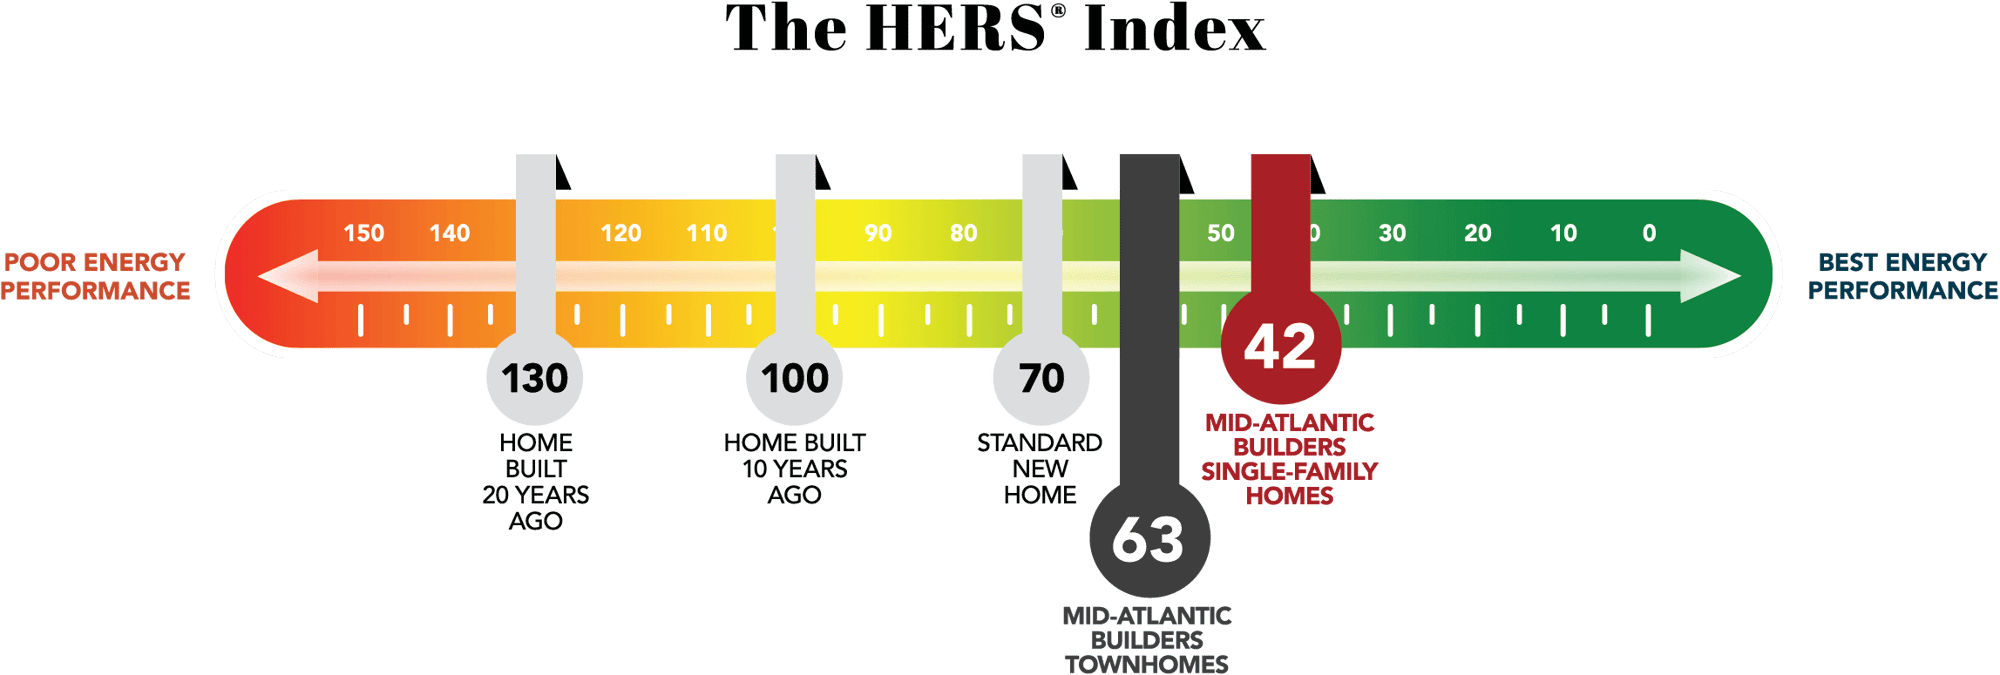 HersIndex-2020-Horizontal